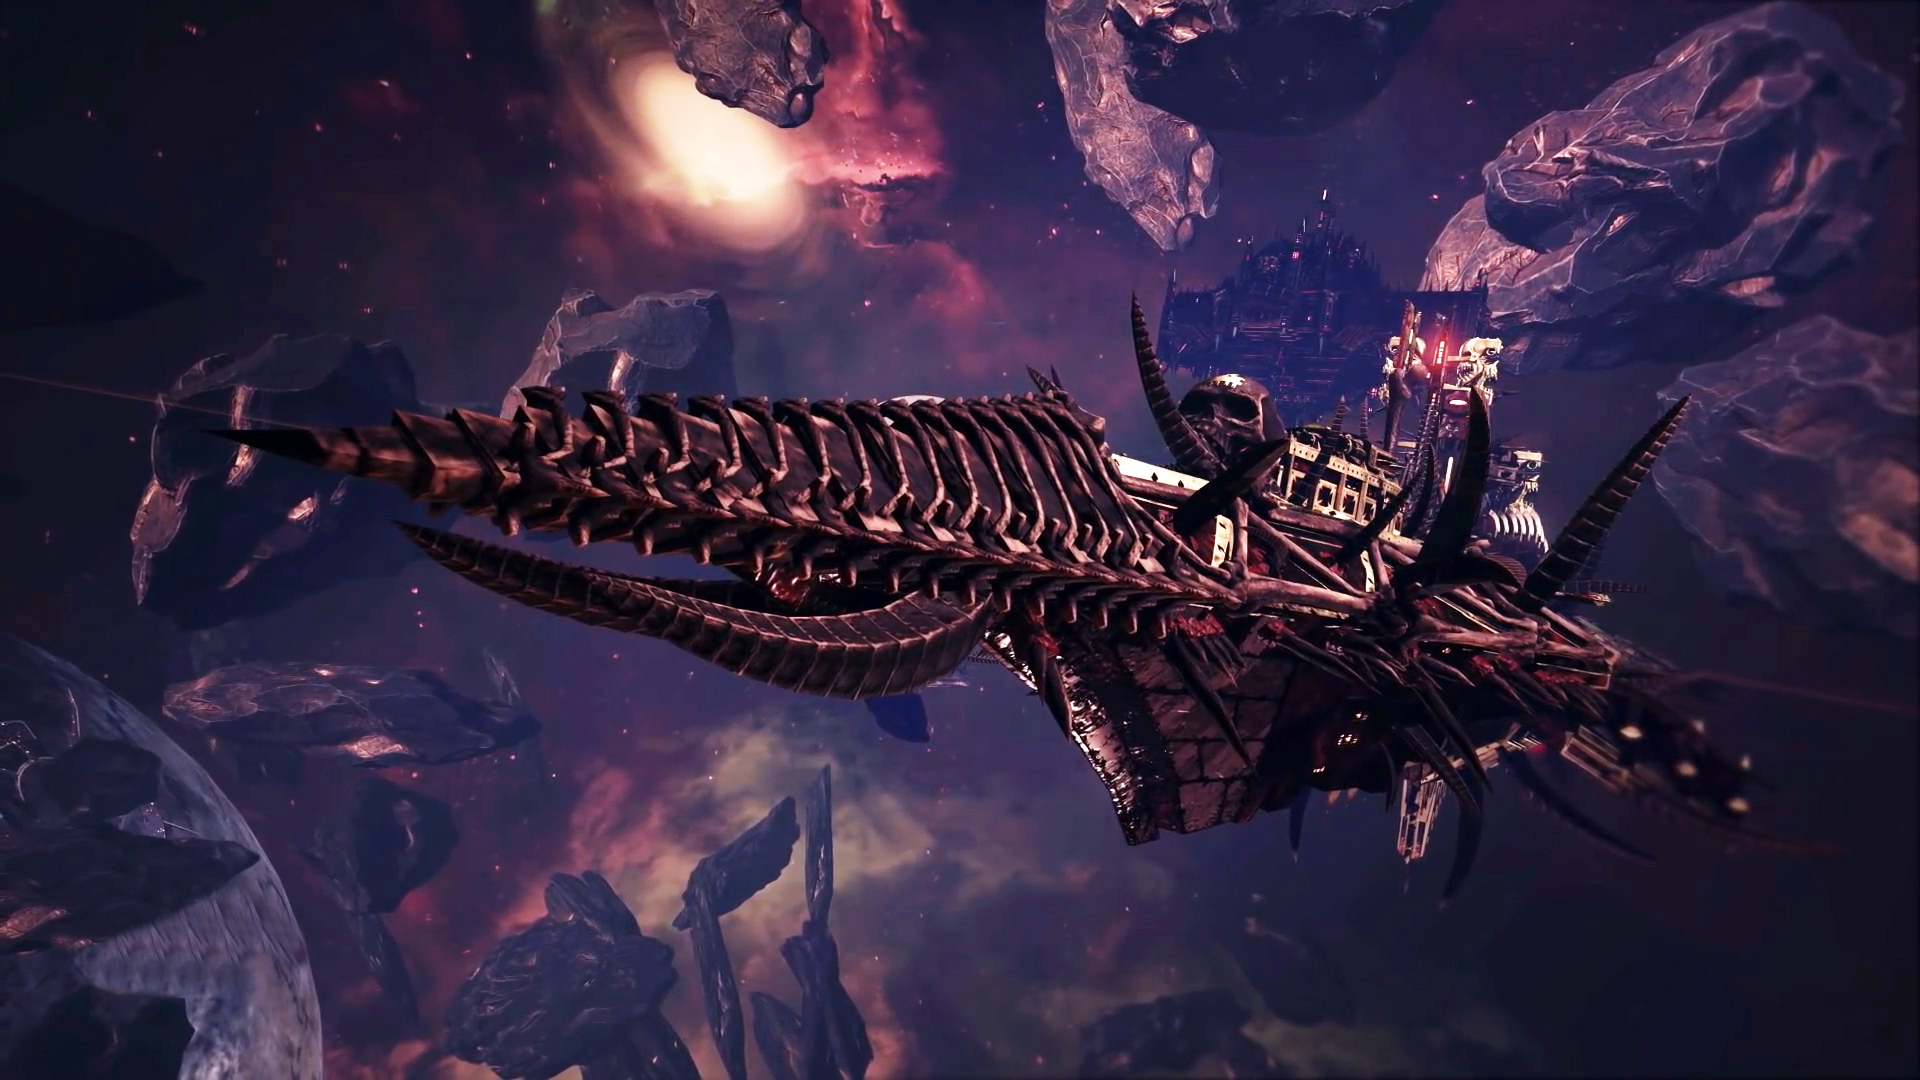 Battlefleet Gothic Armada Chaos Battleship by Focus Home Interactive